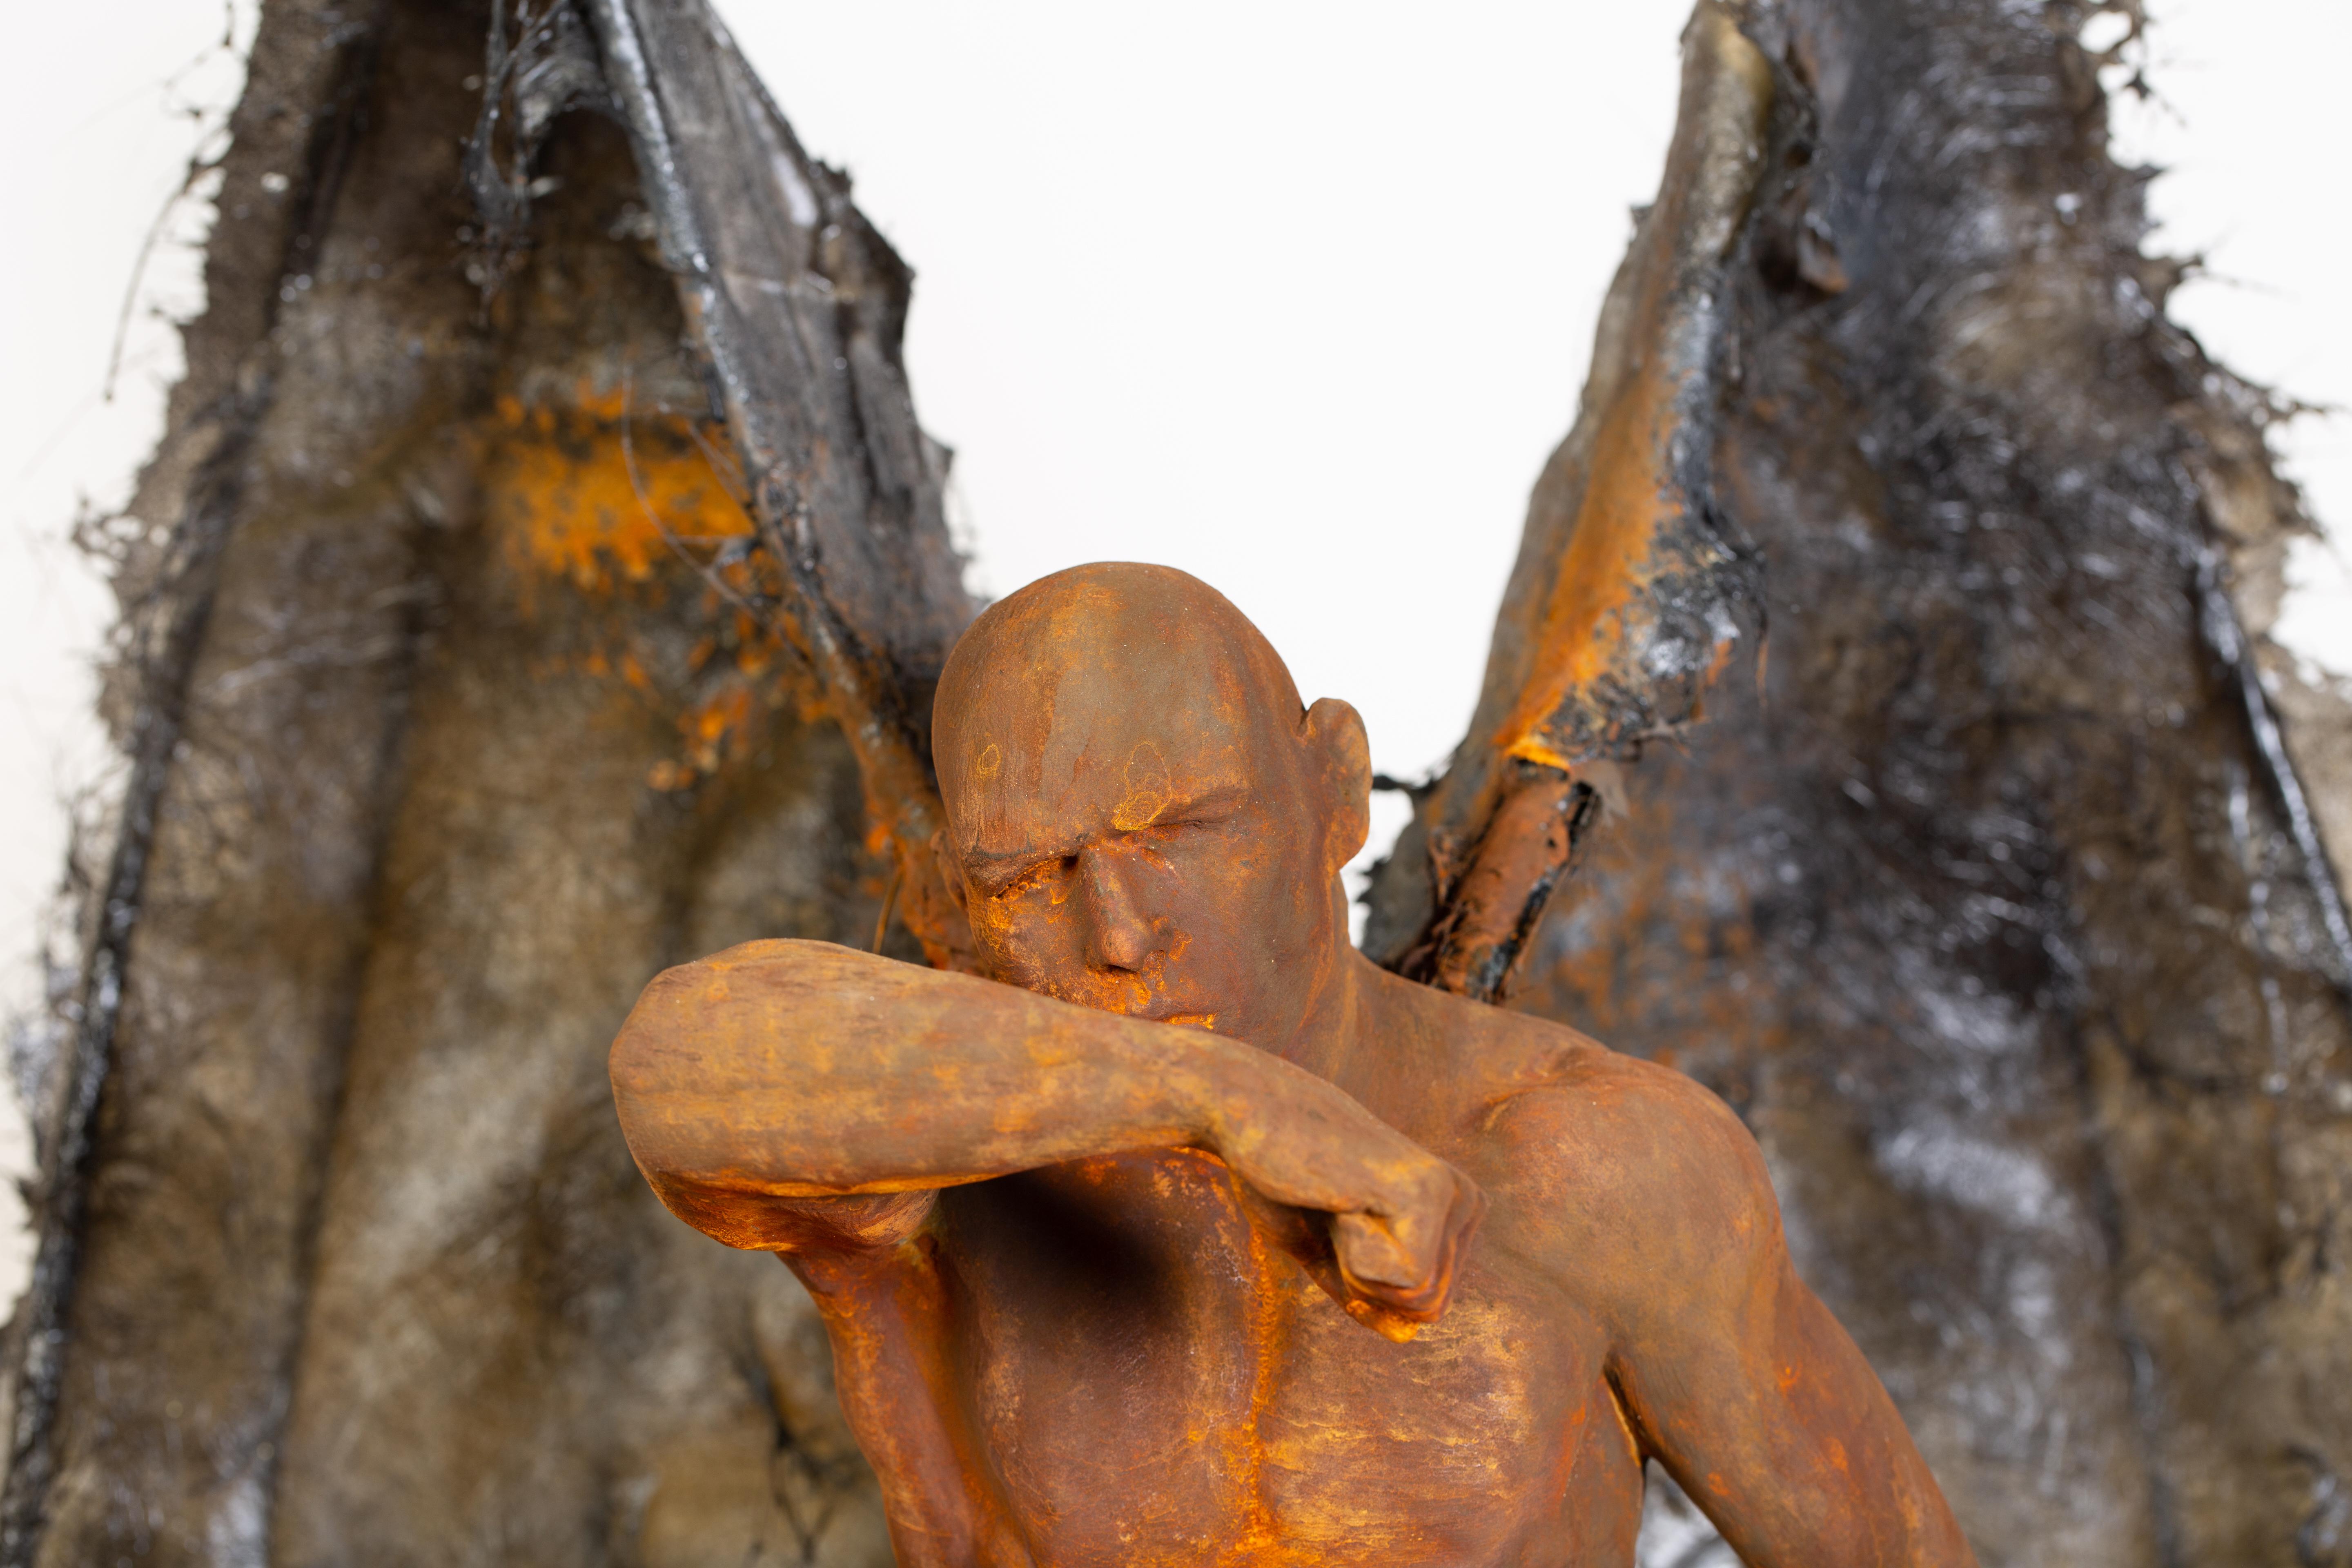 Guardian: Obscura - Winged, Bronze, Mixed Media Sculpture, Rust and Iron Patina (Braun), Nude Sculpture, von Dean Kugler